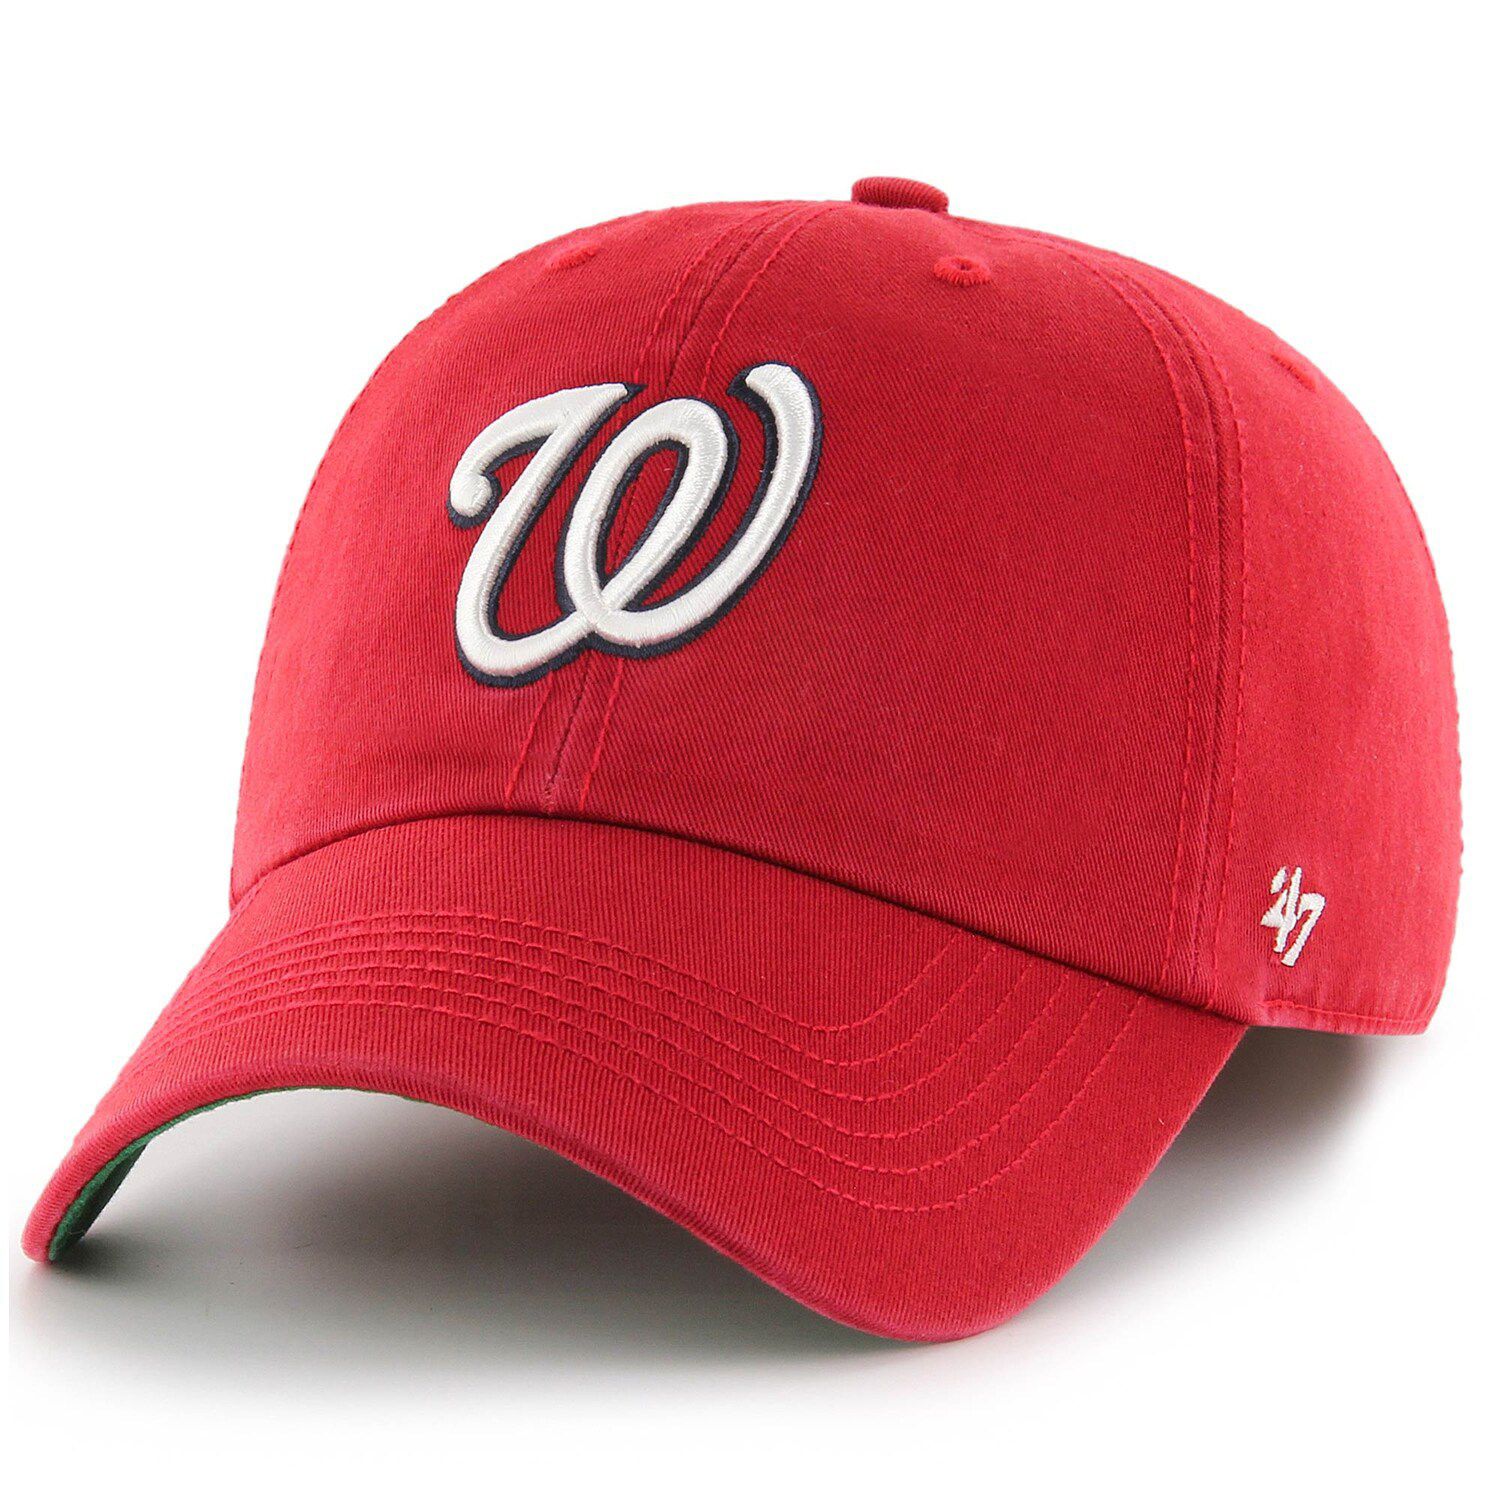 Image for Unbranded Men's '47 Red Washington Nationals Team Franchise Fitted Hat at Kohl's.